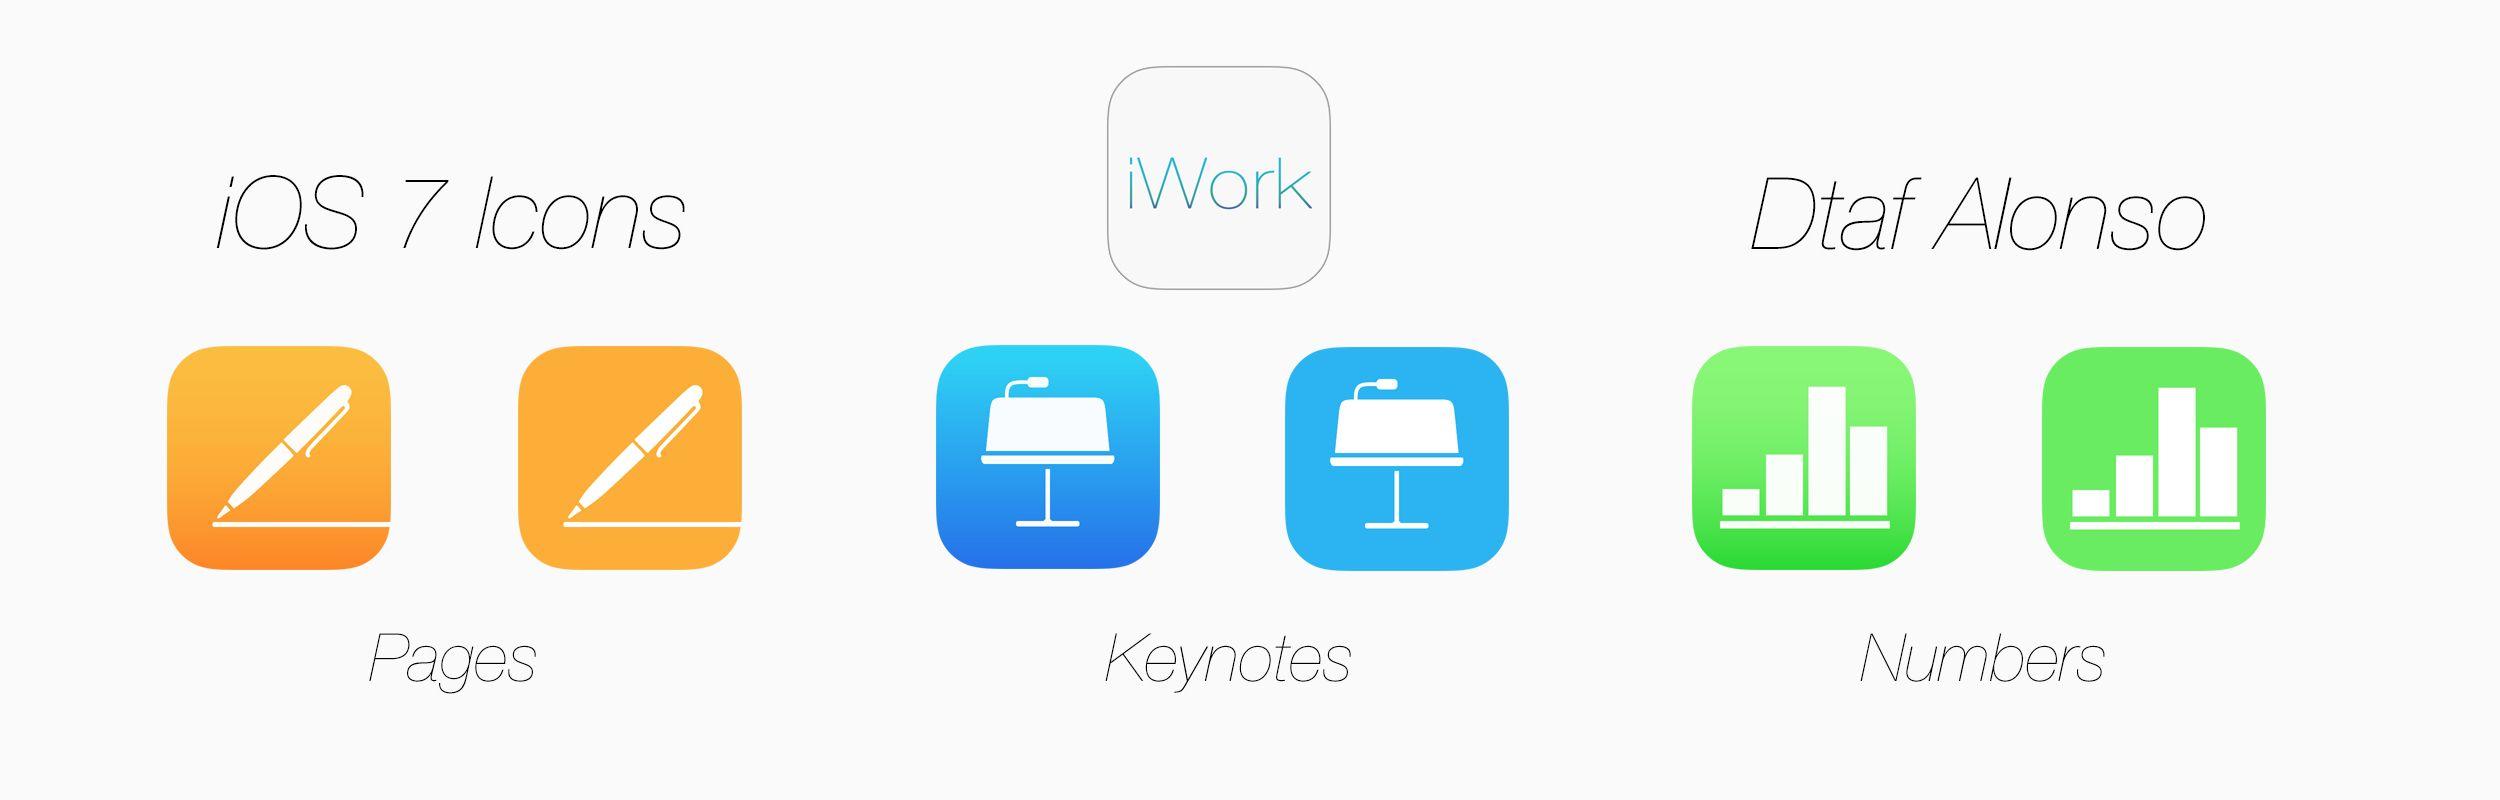 Iwork Logo - iWork icons by dtafalonso on DeviantArt